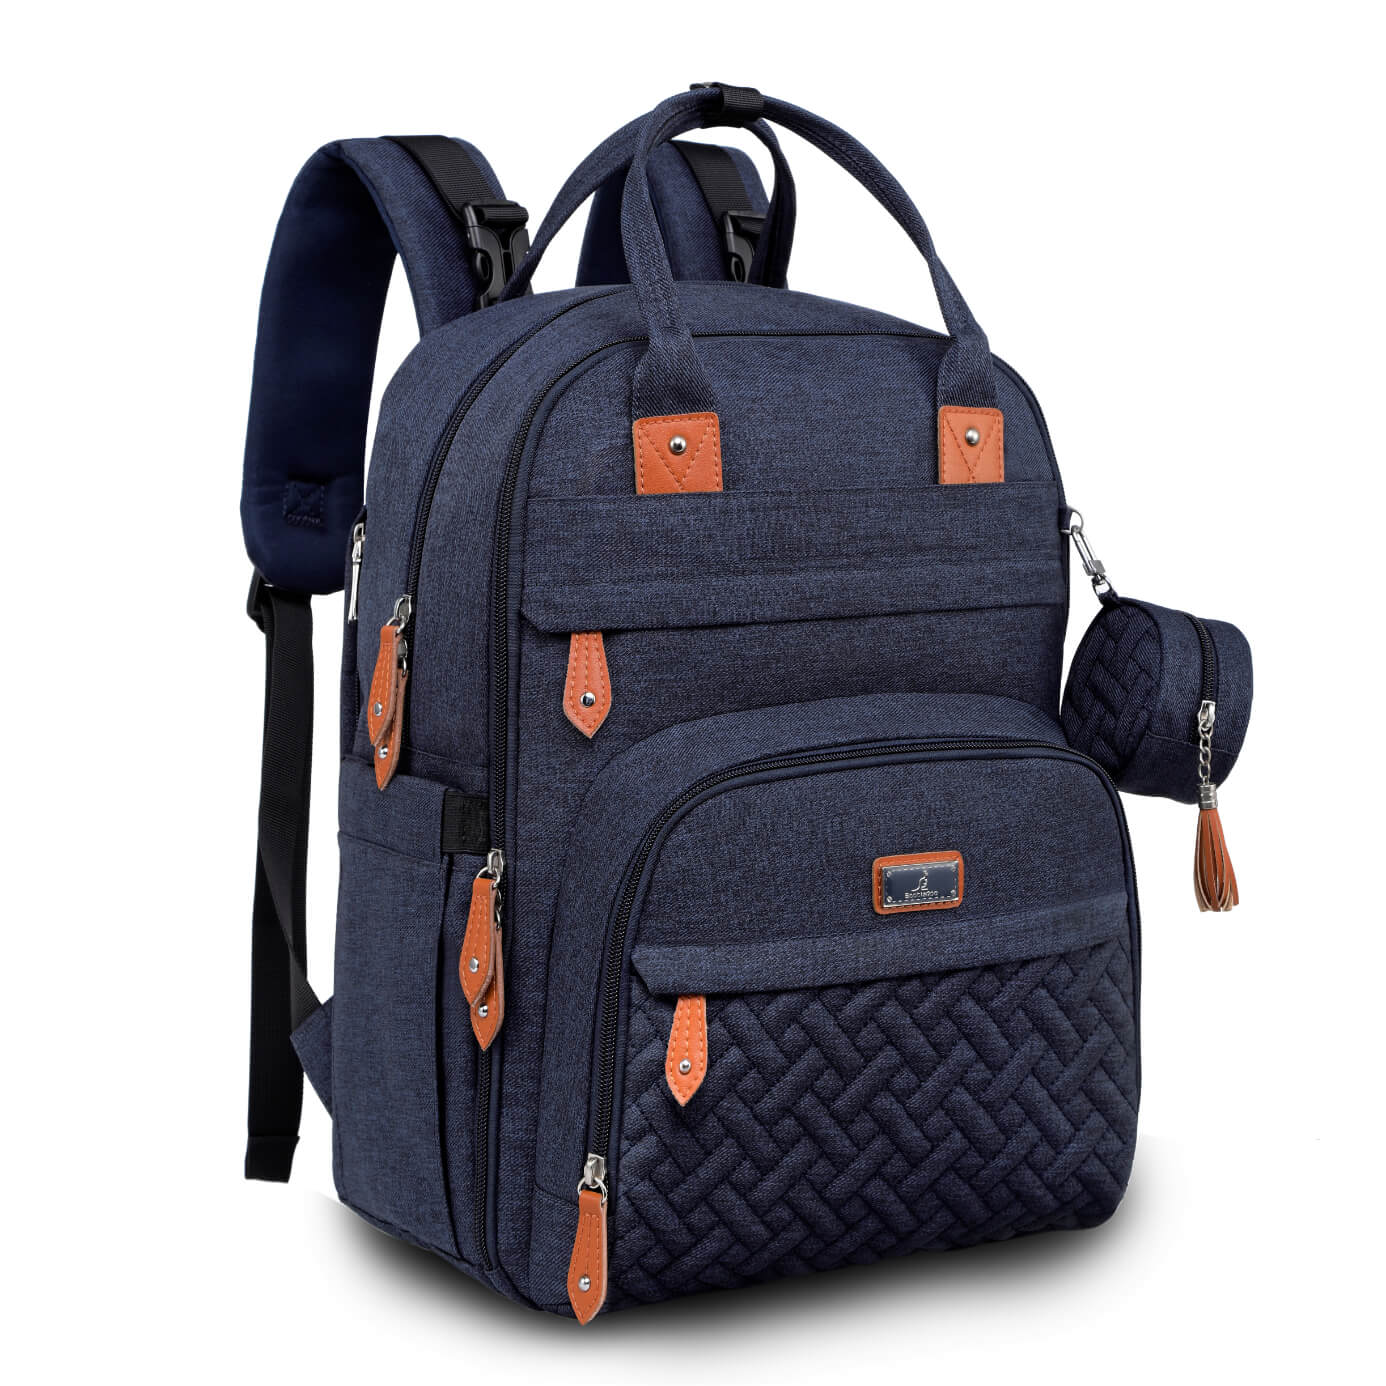 Original Diaper Backpack - Navy Blue